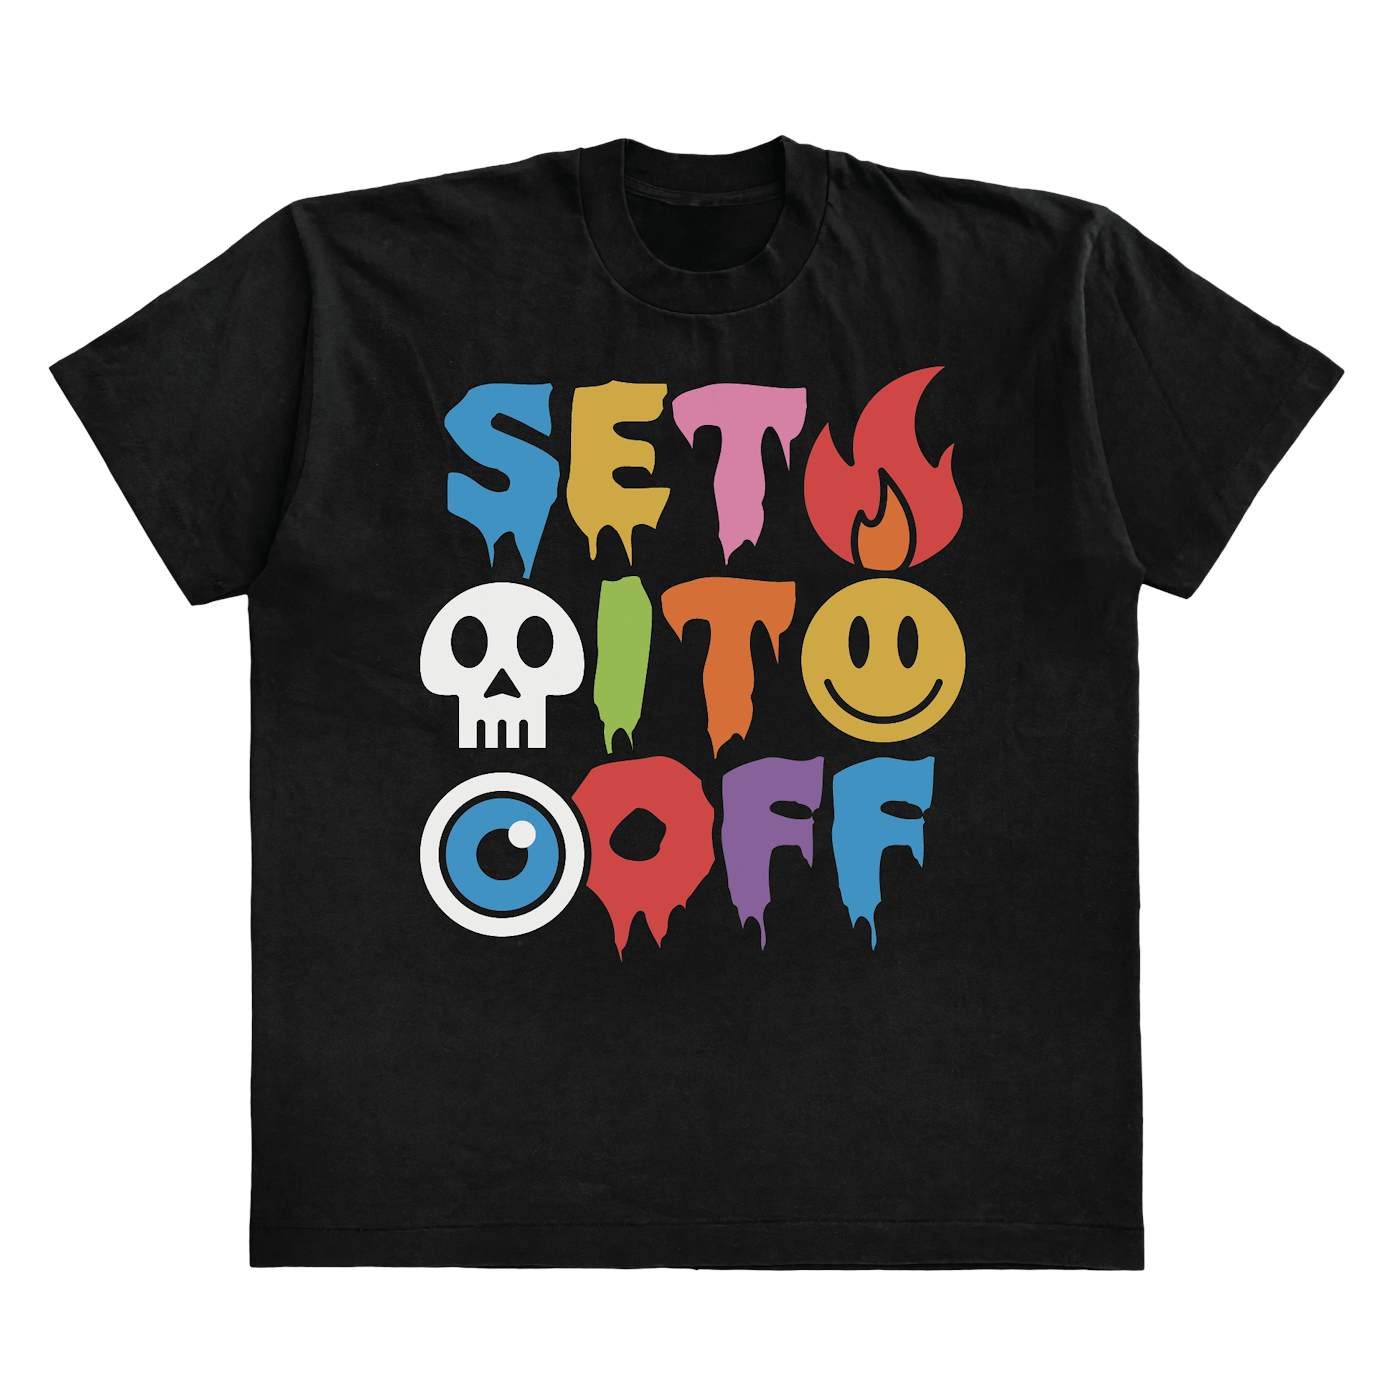 Set It Off "Elsewhere Emojis" T-Shirt